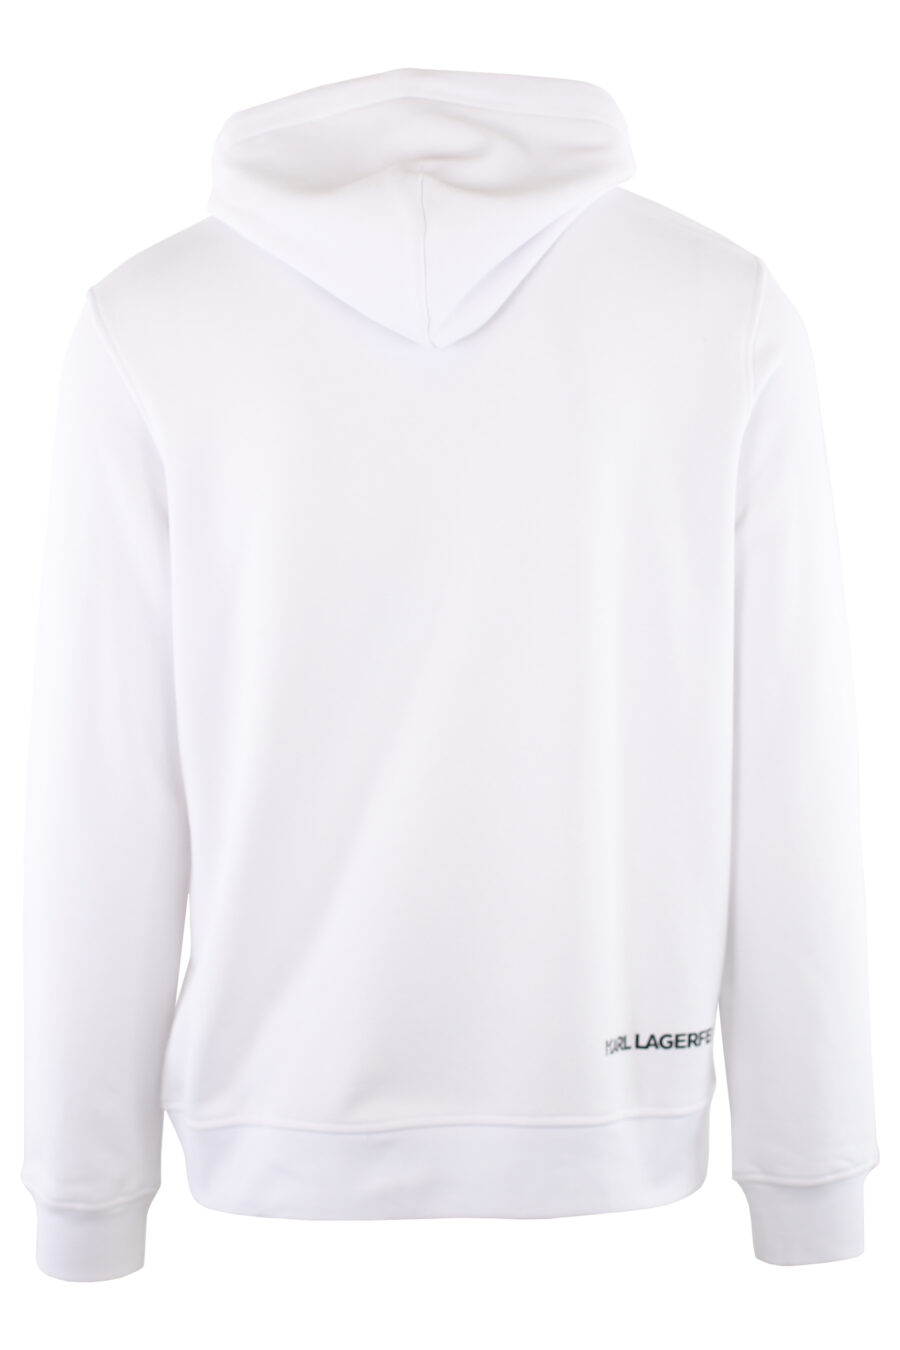 Sweatshirt branca com capuz e logótipo "ikonik" pequeno - IMG 7462